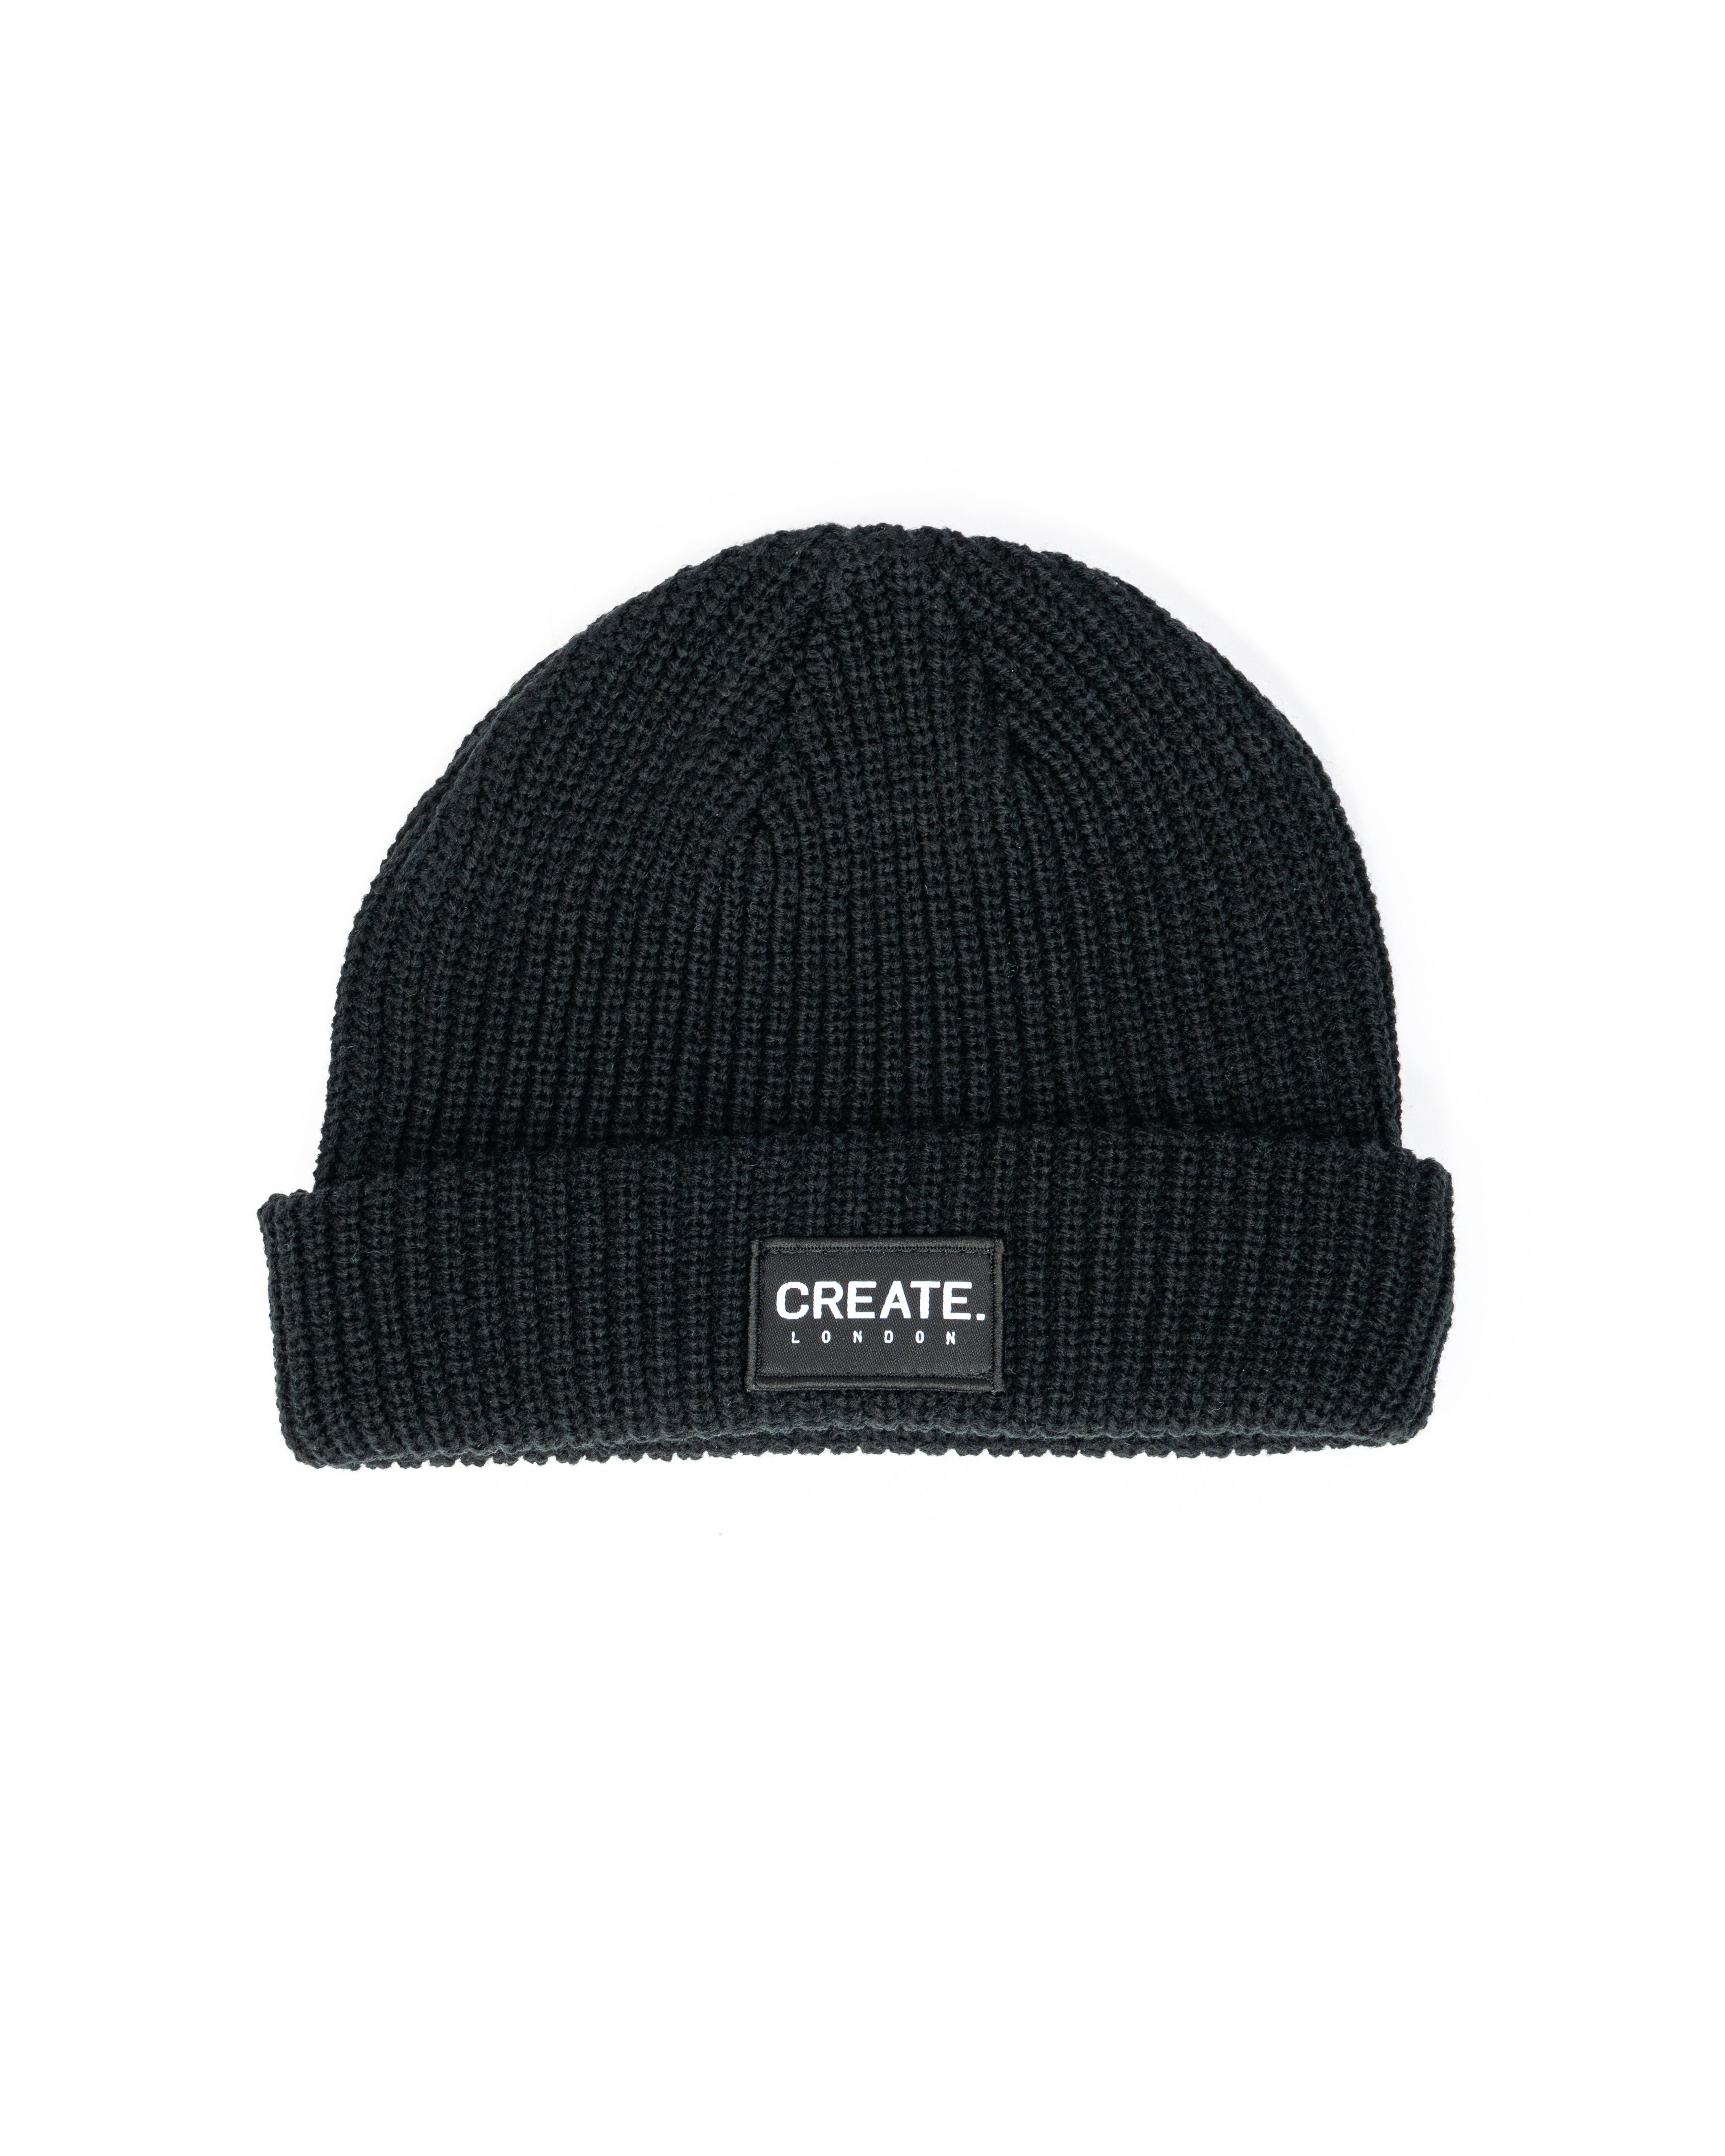 Create. London Cable Beanie -Black